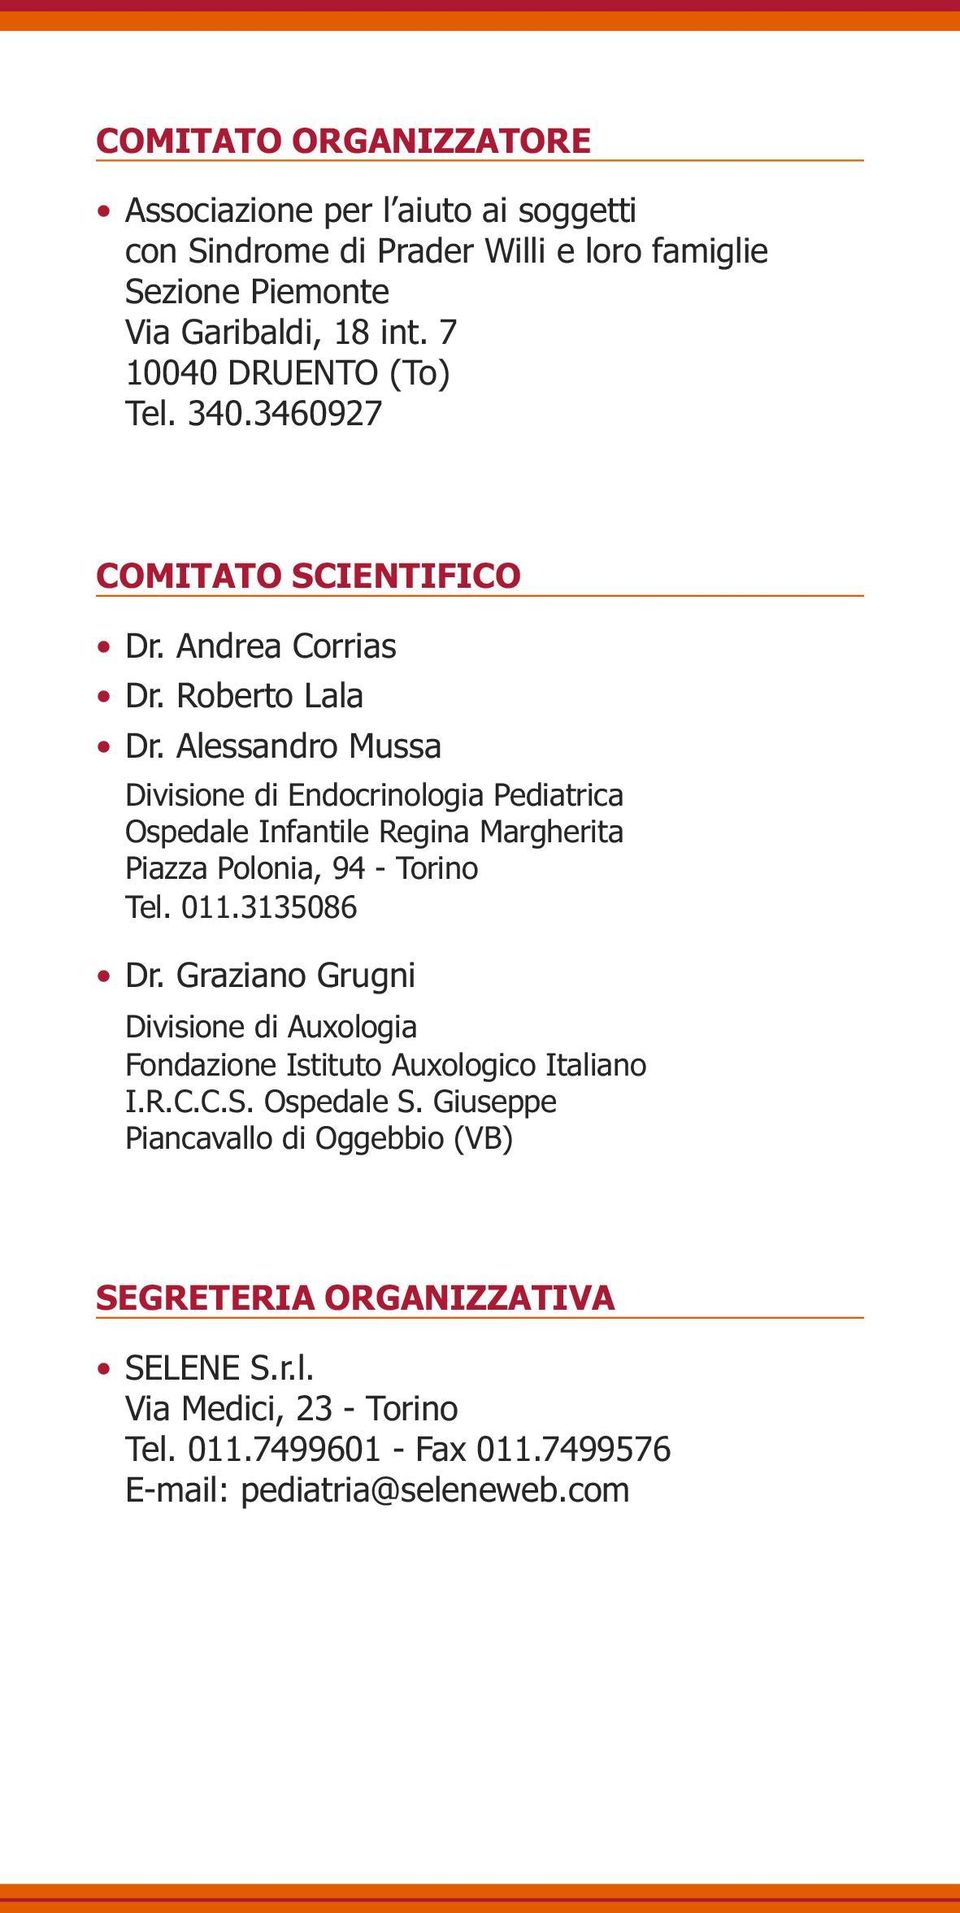 Alessandro Mussa Divisione di Endocrinologia Pediatrica Ospedale Infantile Regina Margherita Piazza Polonia, 94 - Torino Tel. 011.3135086 Dr.